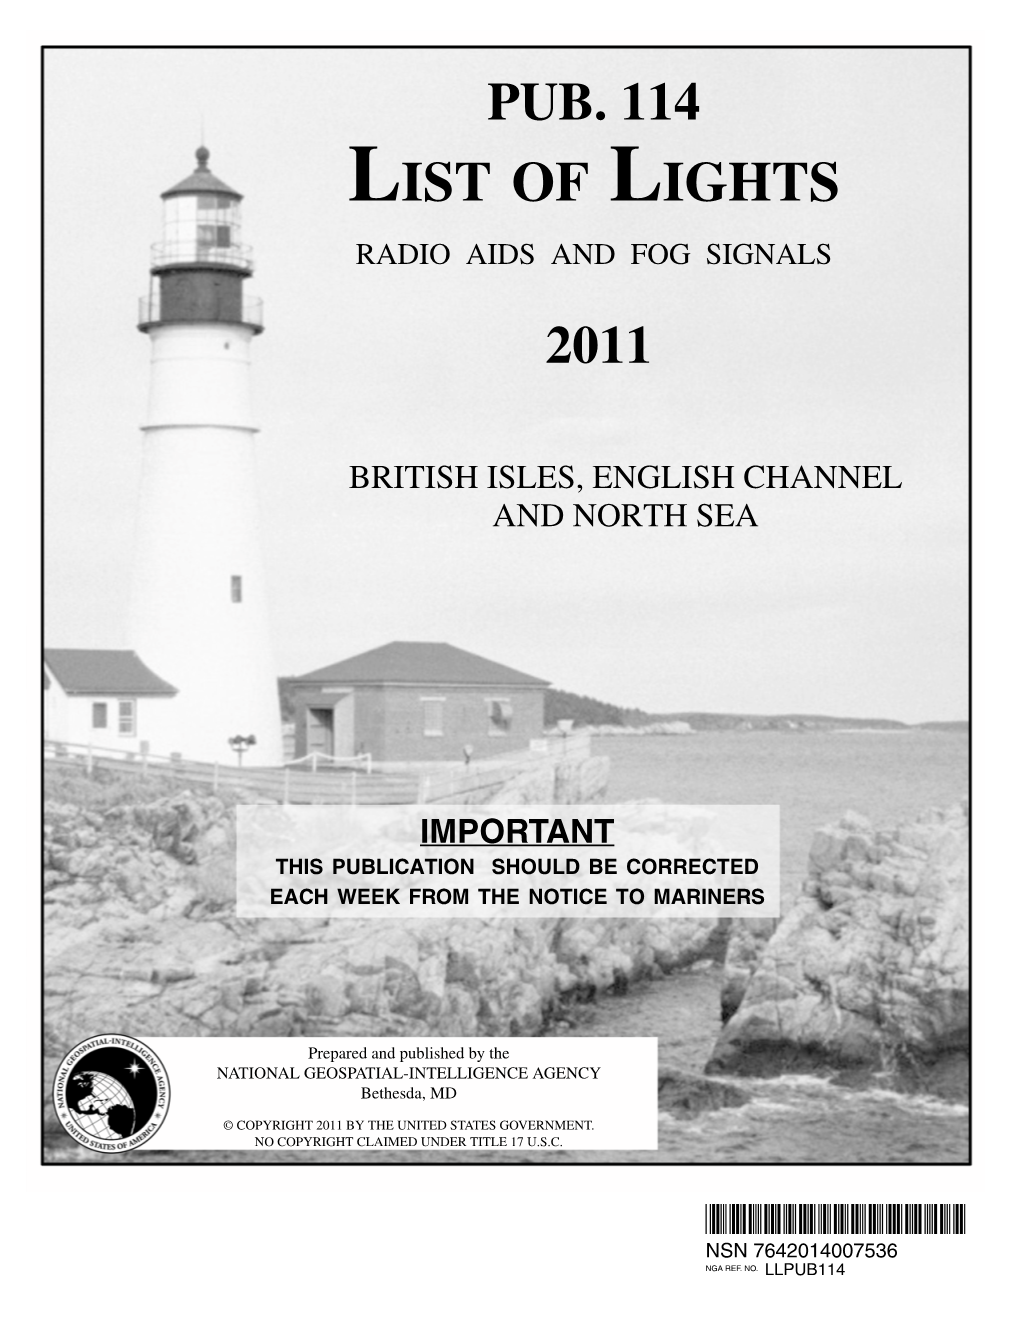 List of Lights Radio Aids and Fog Signals 2011